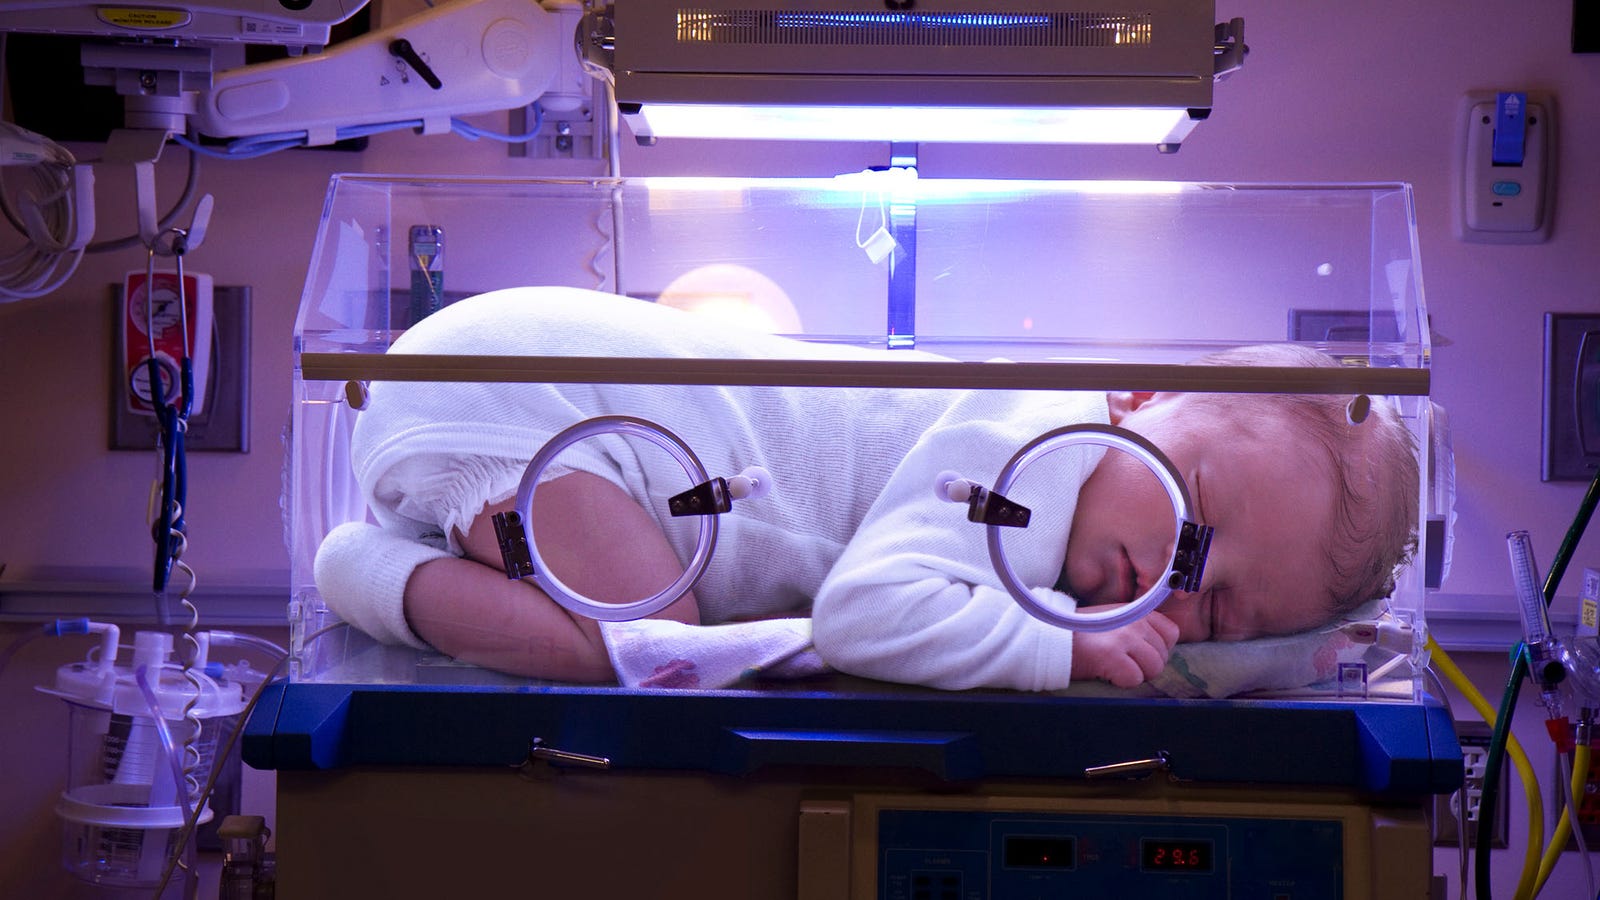 hospital incubator kor babies